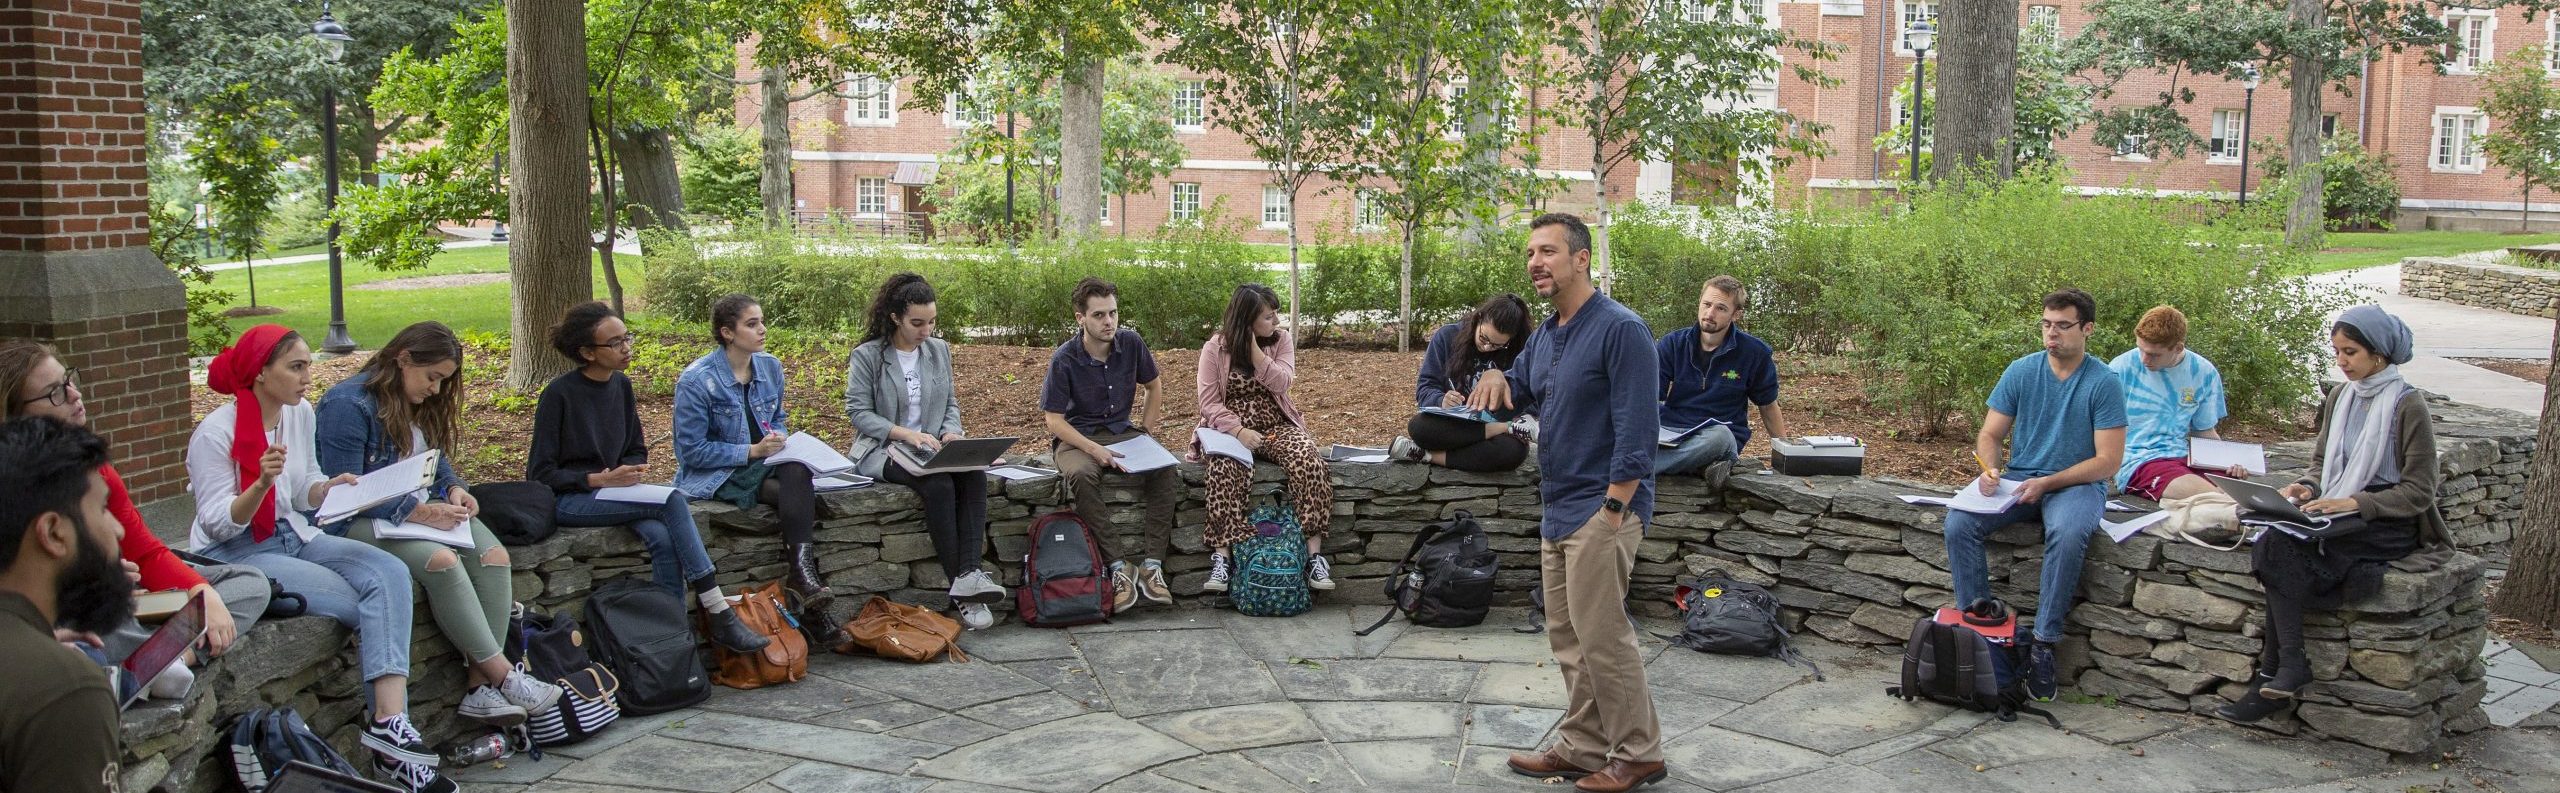 UConn students learning outside